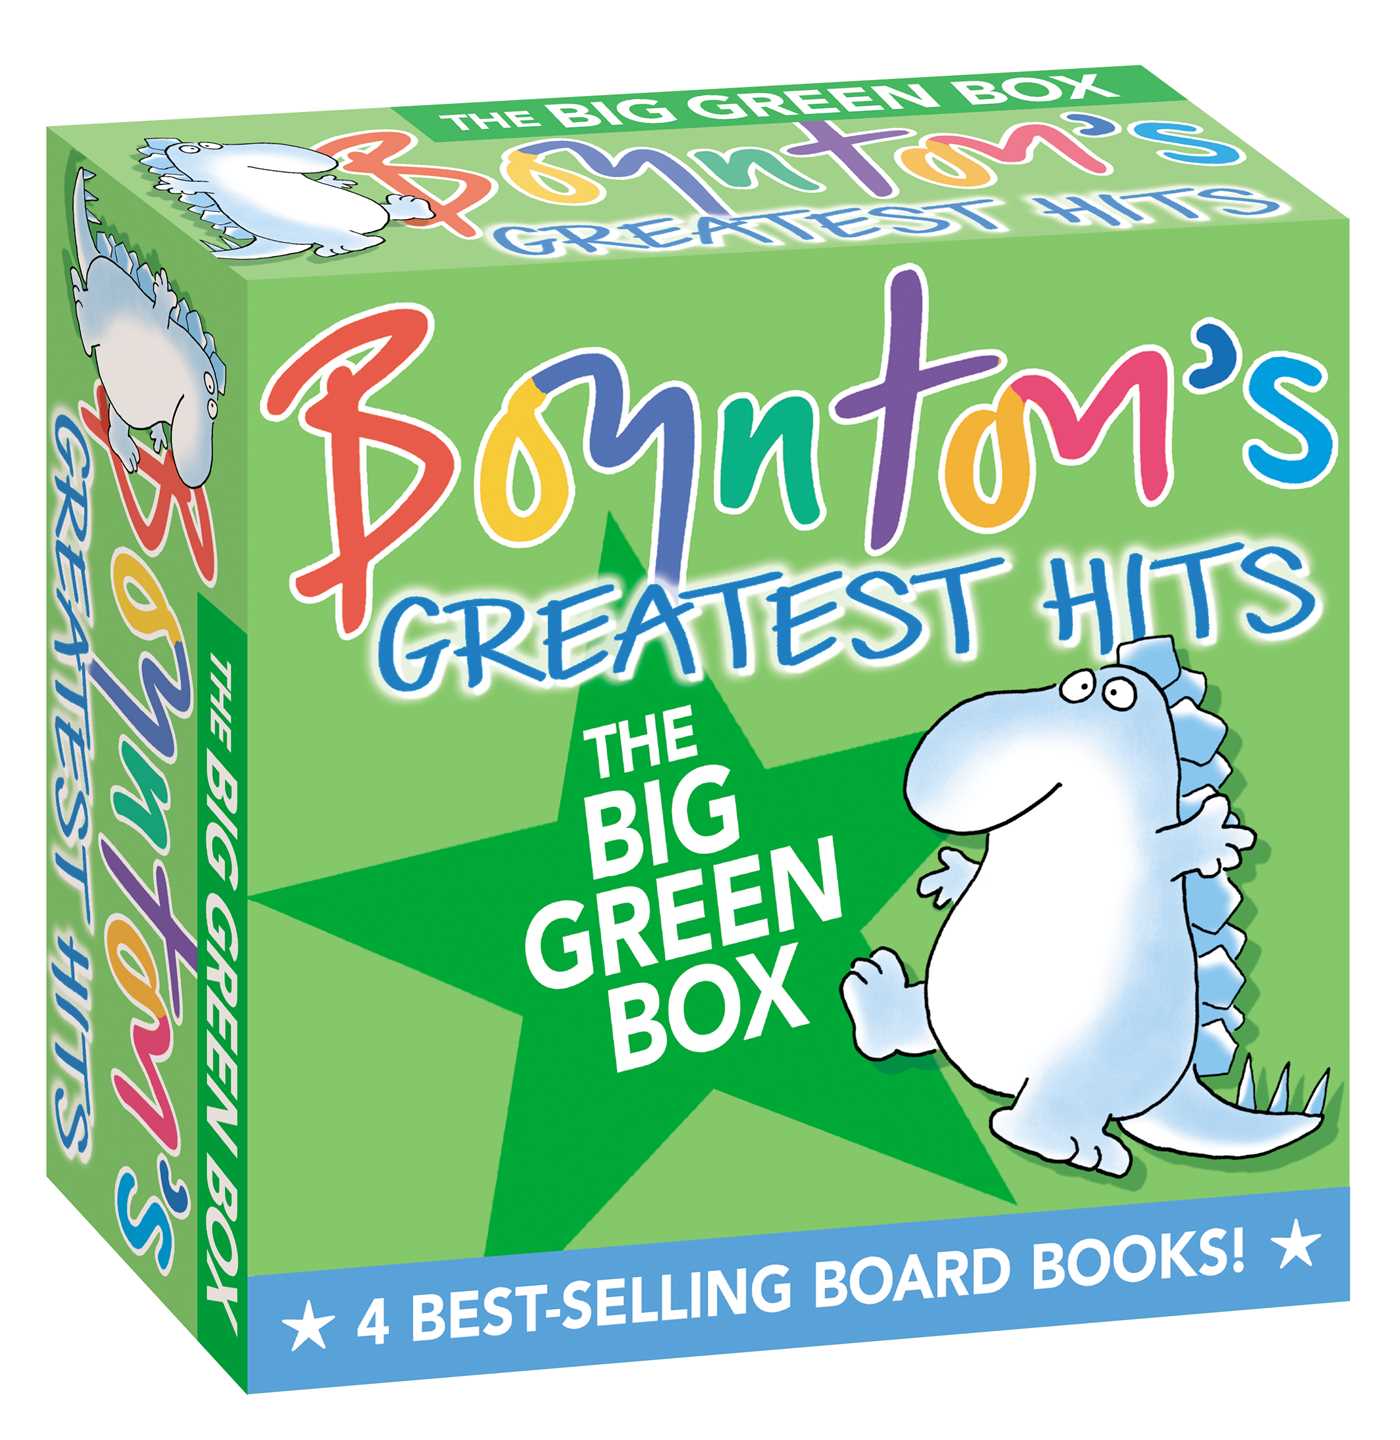 Boynton's Greatest Hits The Big Green Box (Boxed Set)